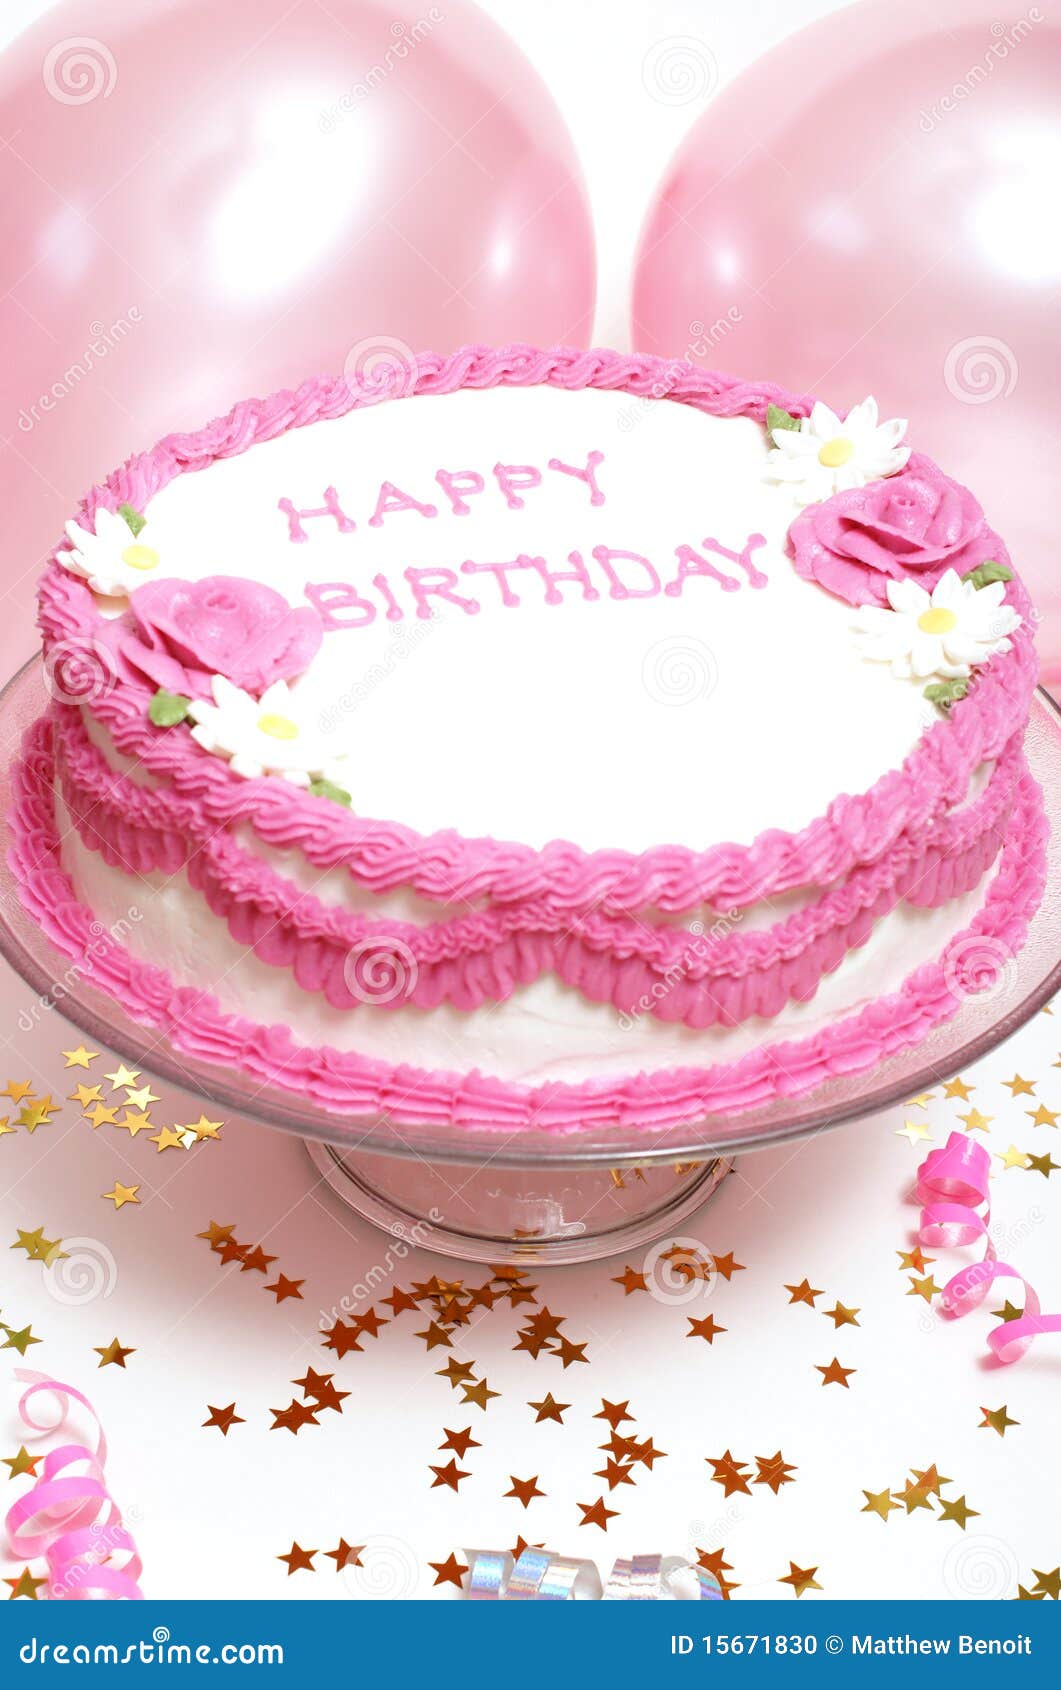 Birthday Cake stock photo. Image of ceremony, occasion - 15671830